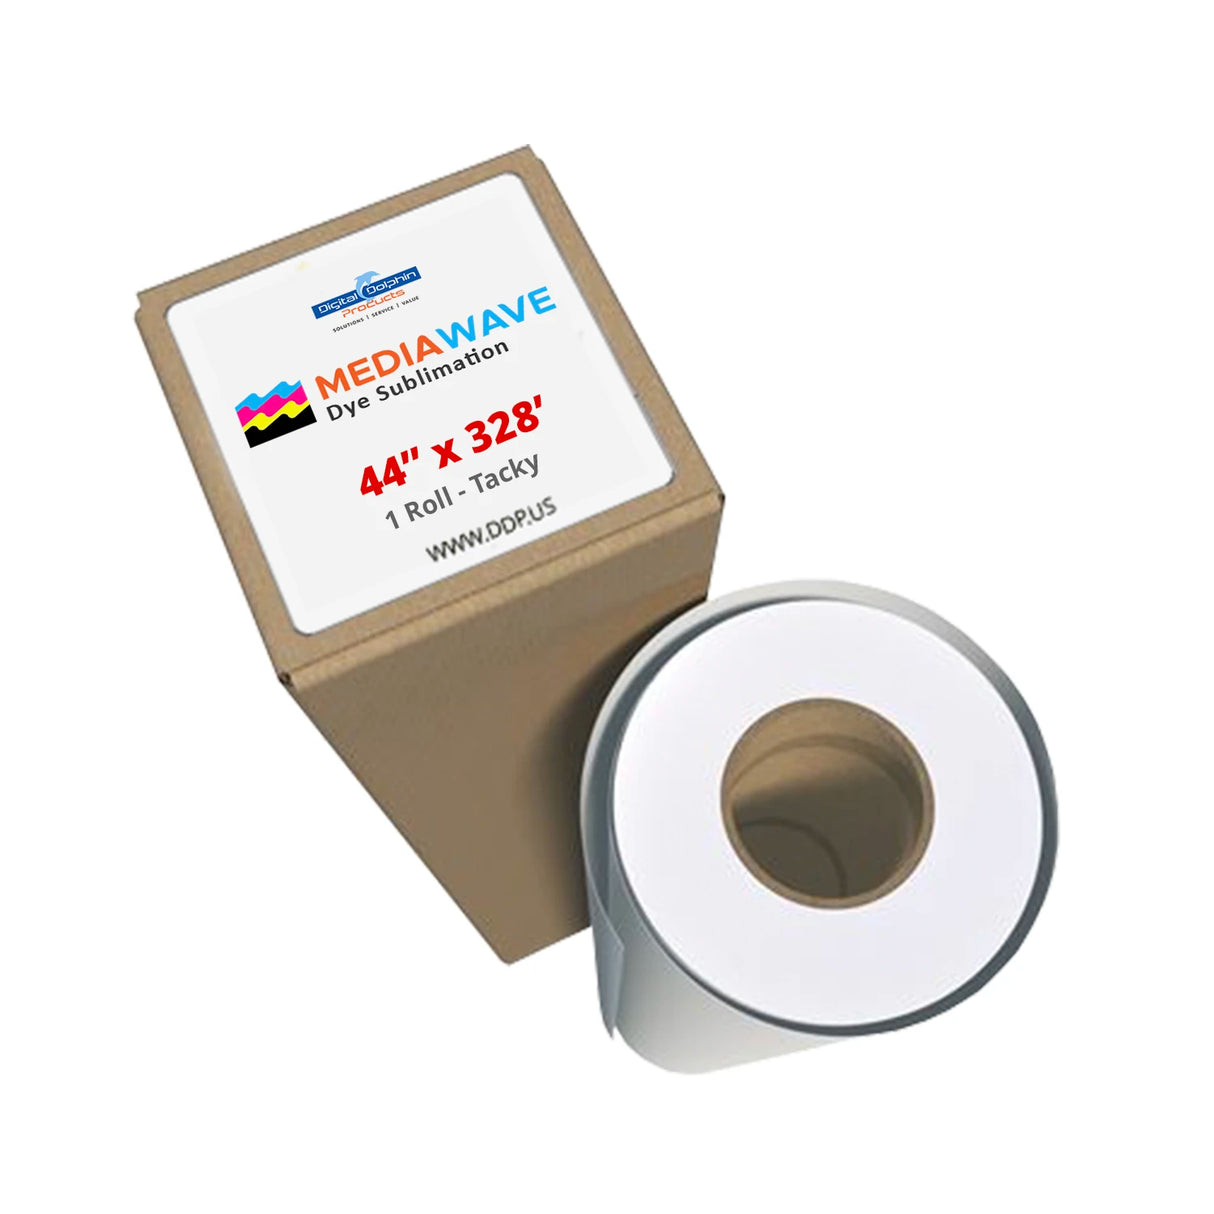 MediaWave Tacky Dye Sublimation Paper 44"x328' Roll